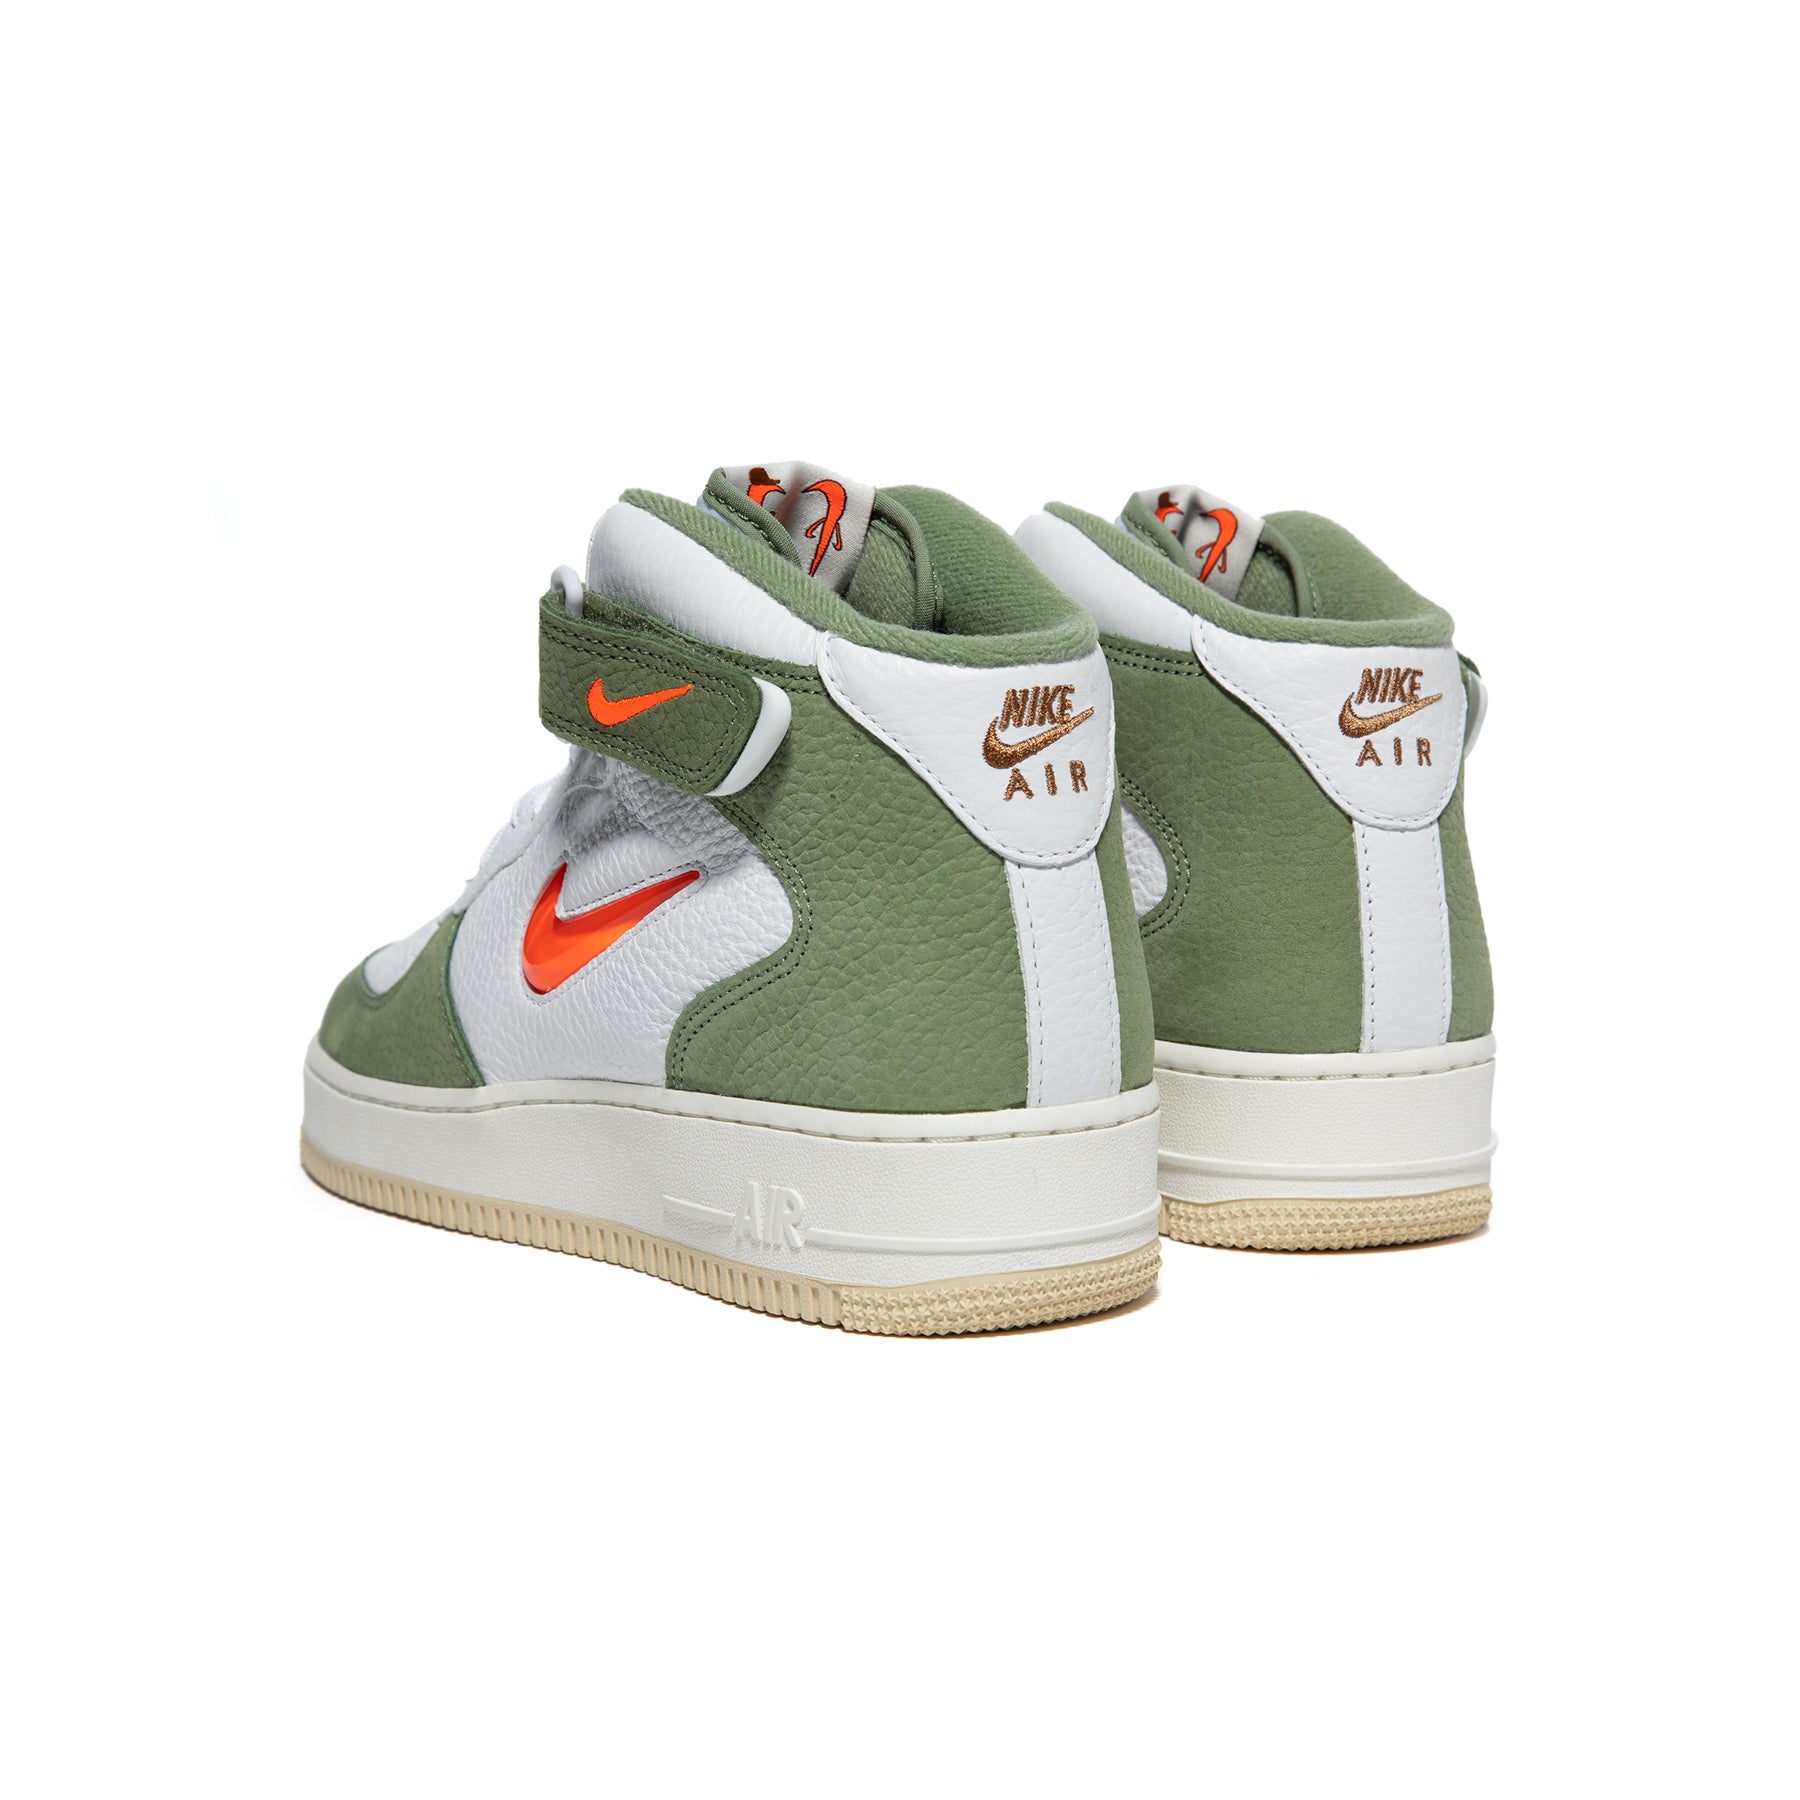 Nike Air Force 1 Mid QS 8.5 / White/Total Orange-Oil Green